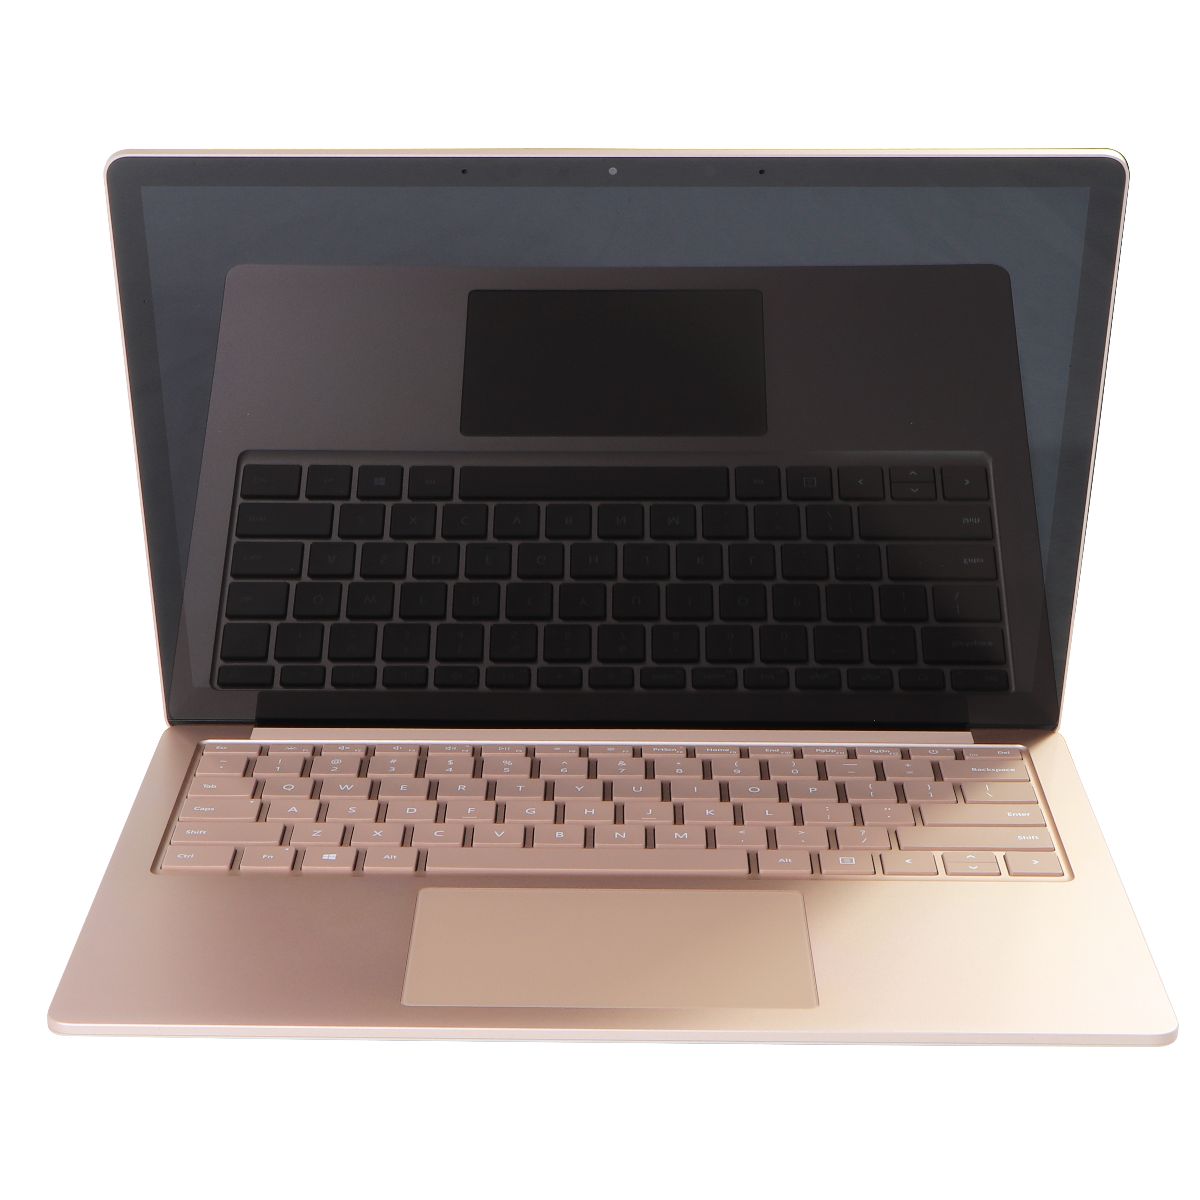 Microsoft Surface Laptop 3 (13.5-inch) 1868 (i5-1035G7/256GB/8GB) - Sandstone